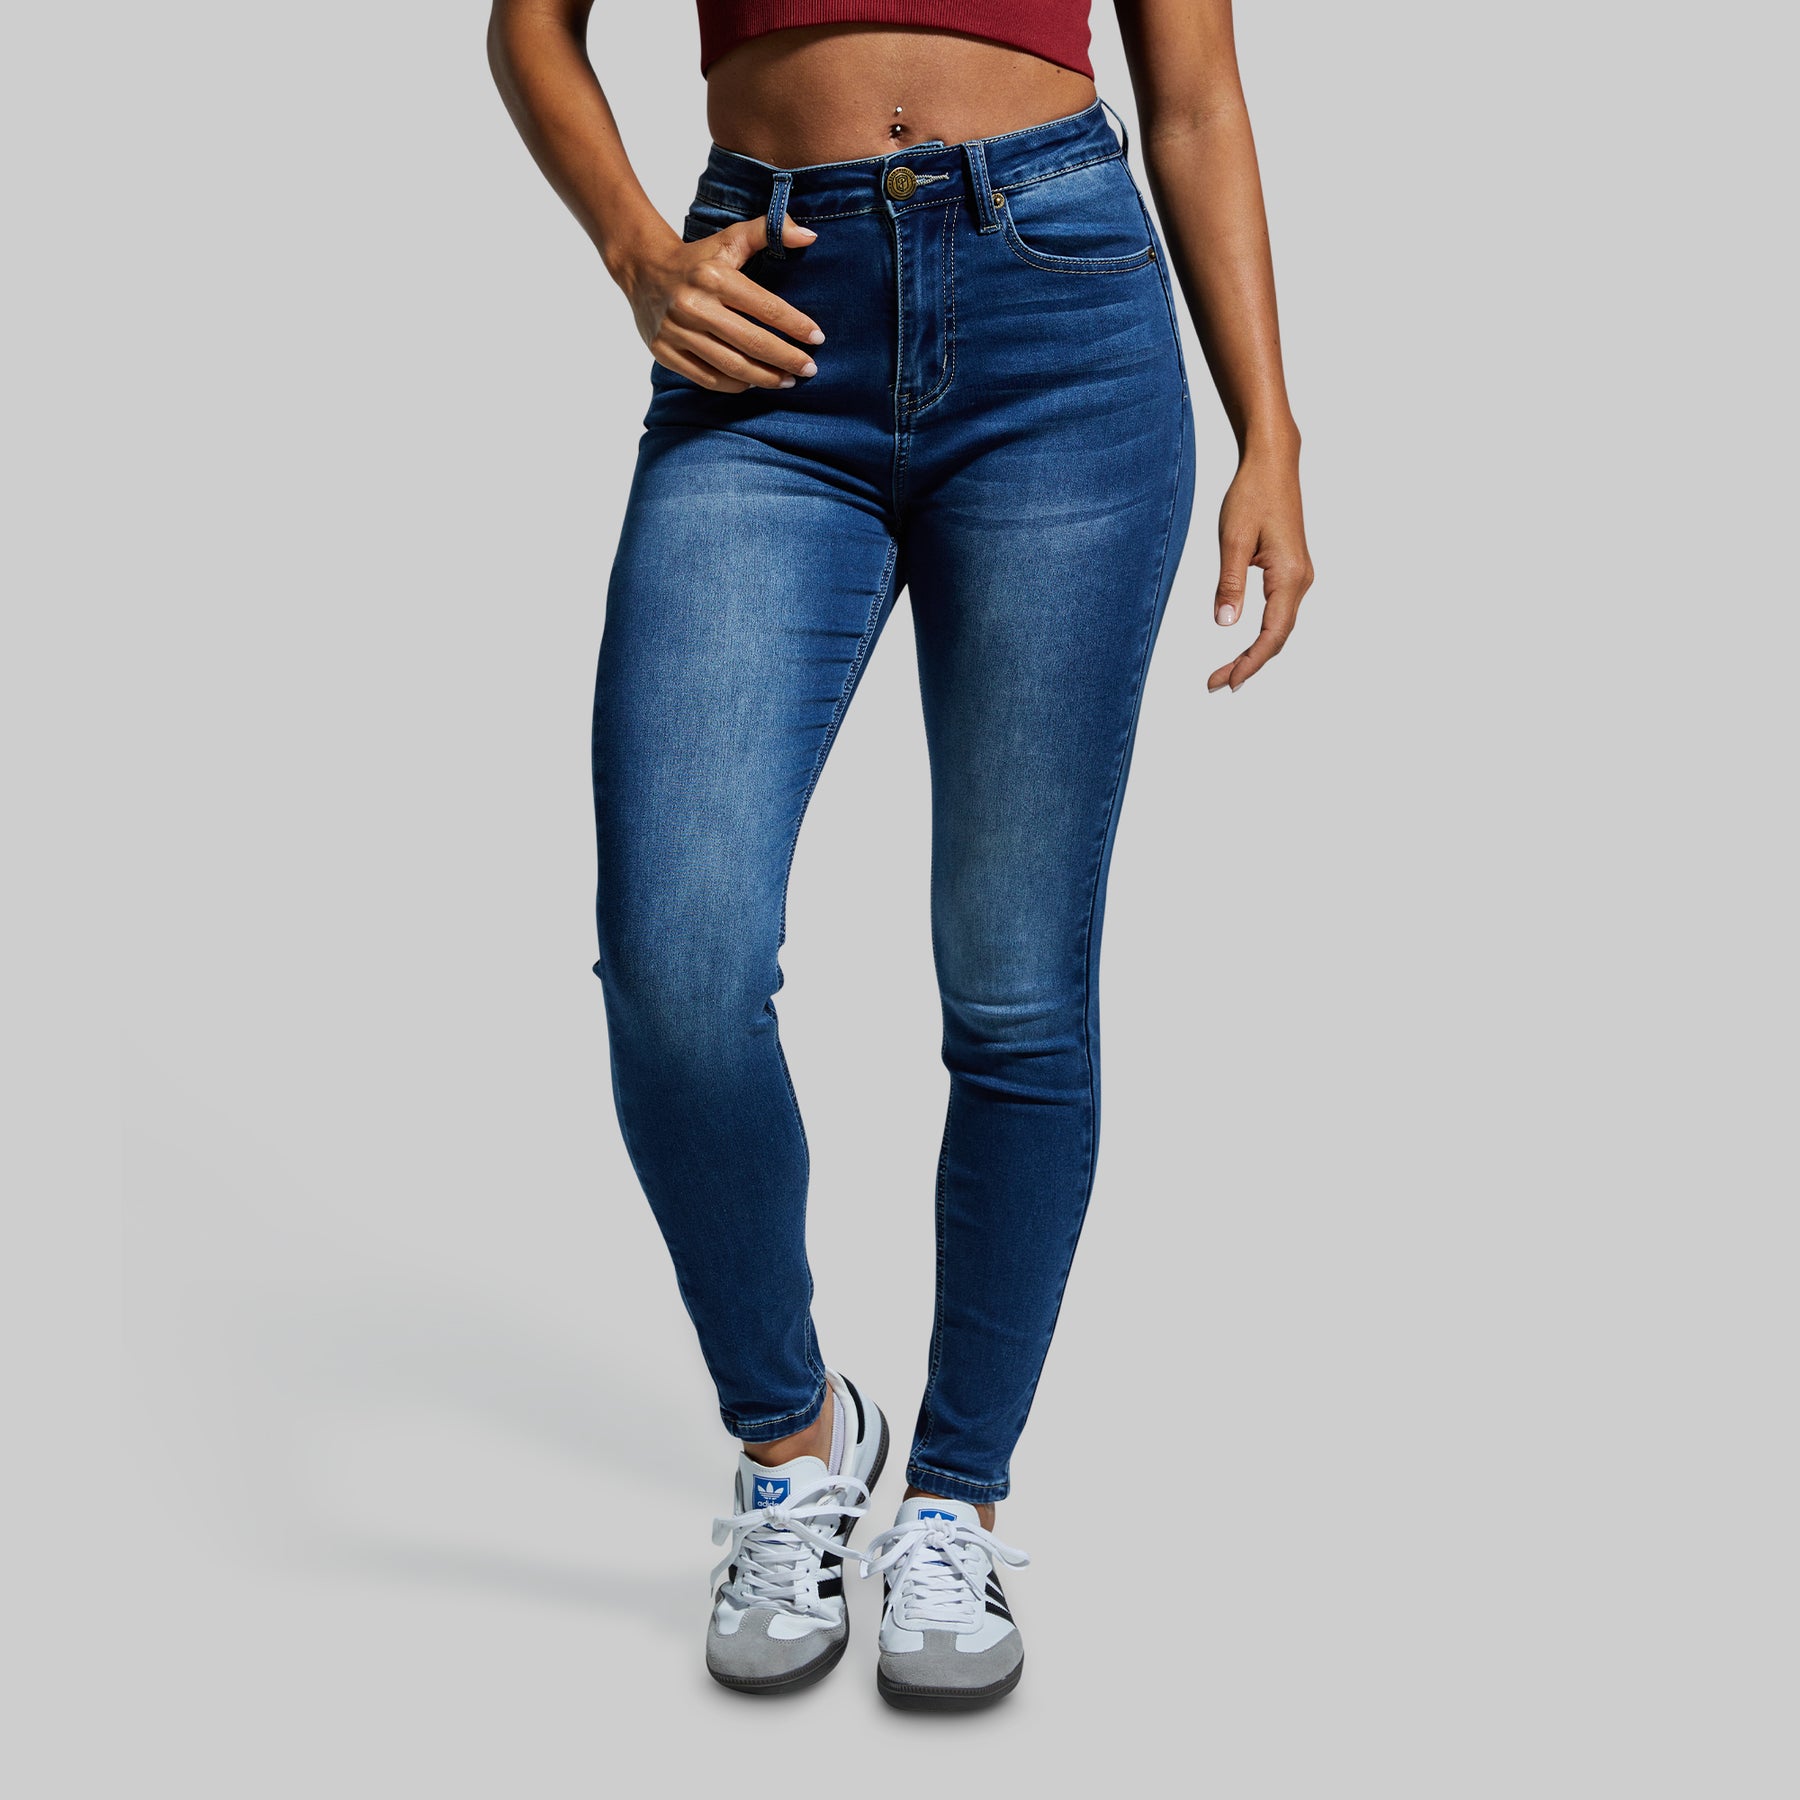 Women's Dark Wash Skinny Jeans  Stretchy Denim Jeans – Born Primitive